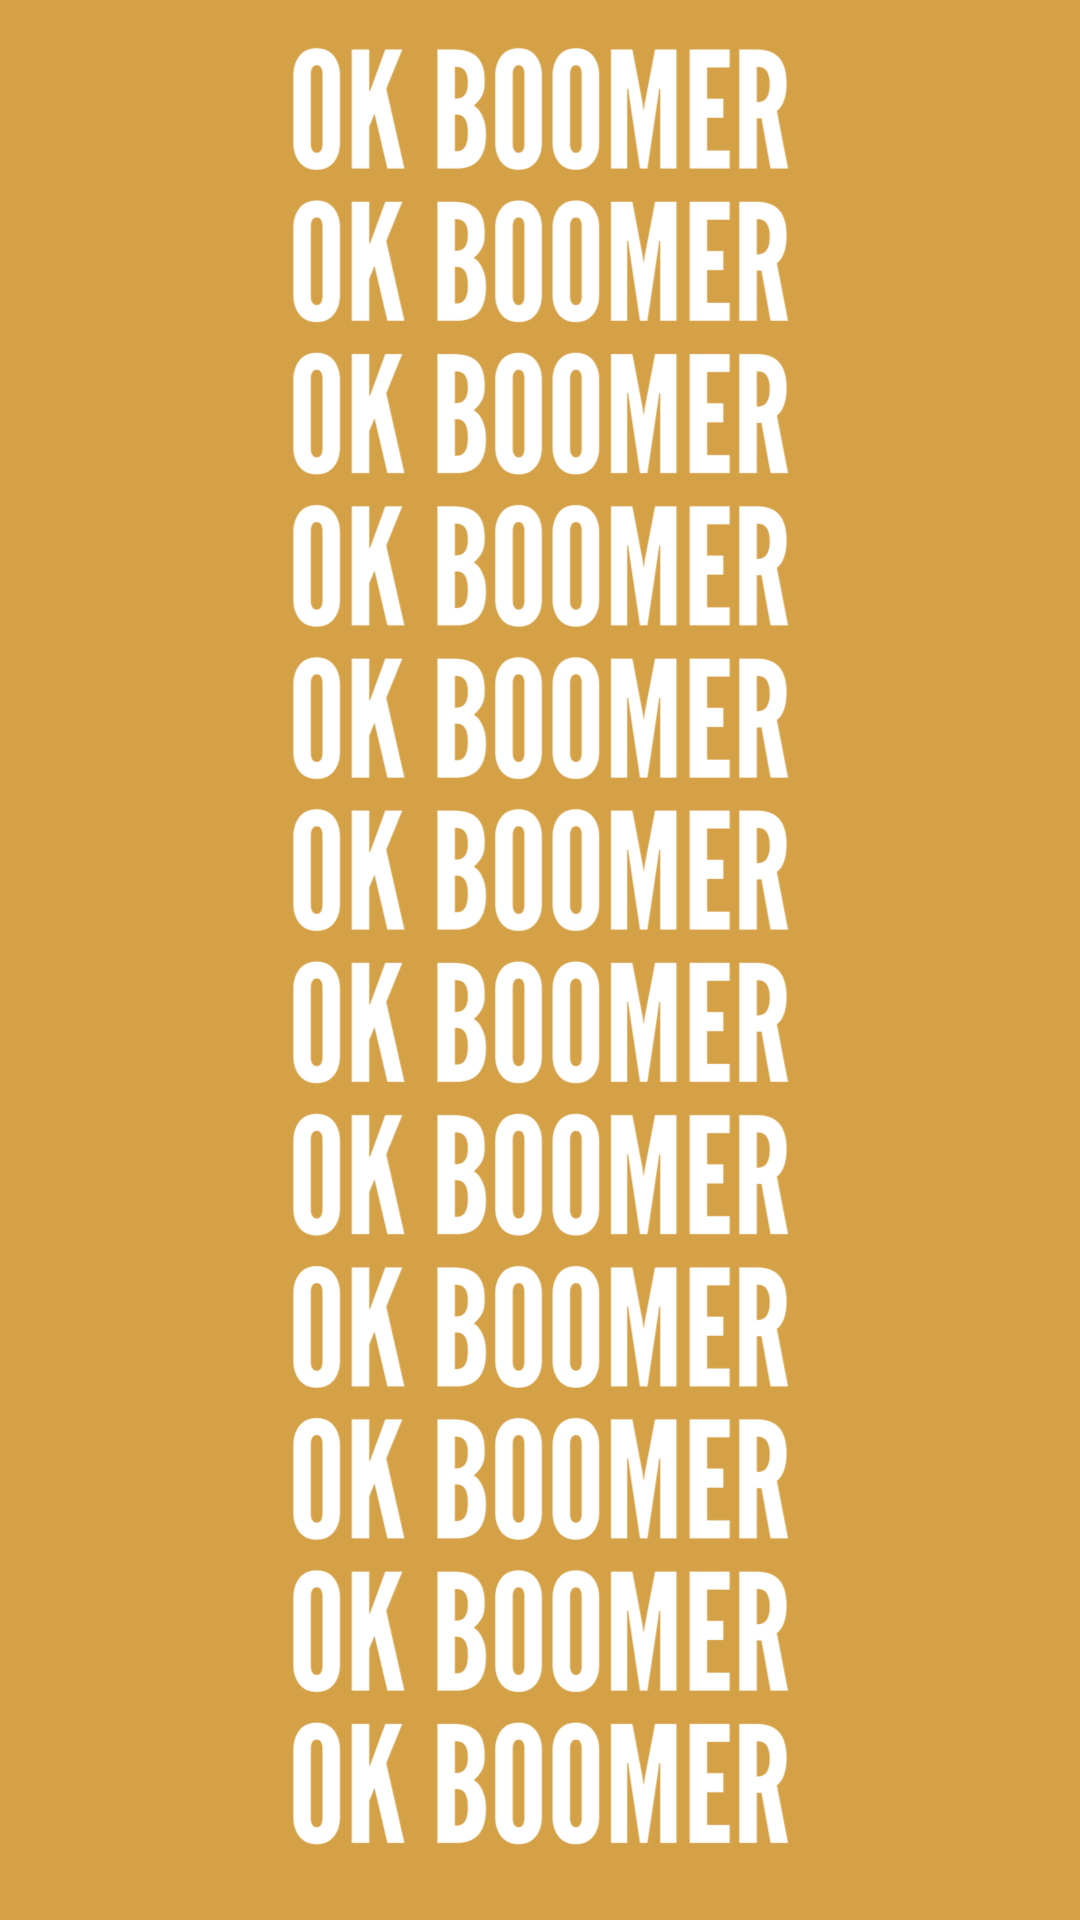 ok boomer wallpaper #okboomer. iPhone background